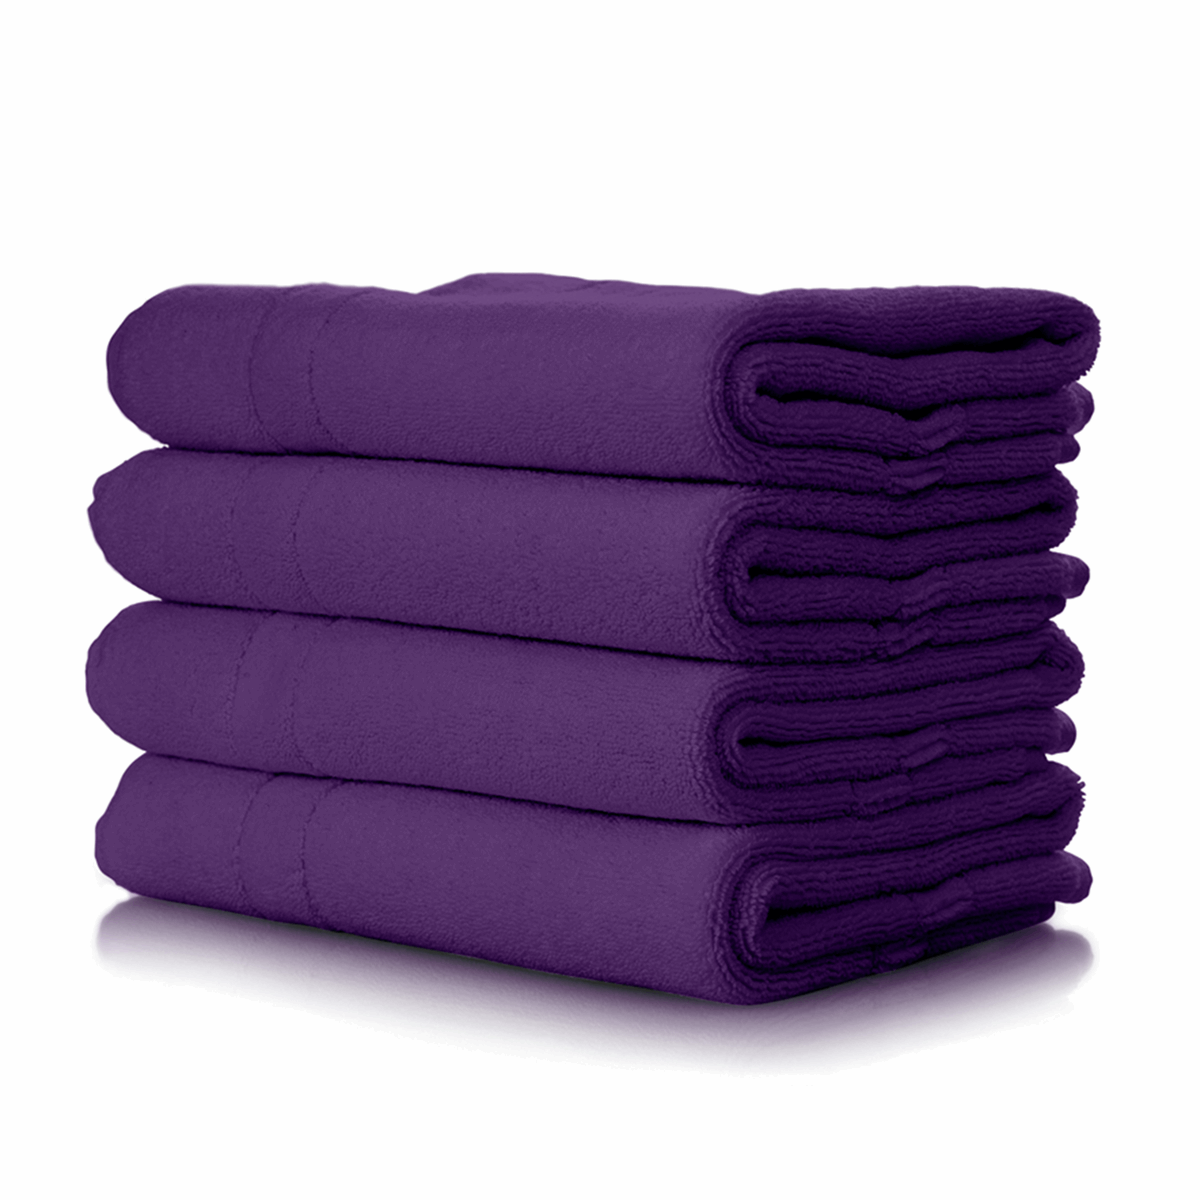 Dylon Fabric Machine Dye - Deep Violet 30